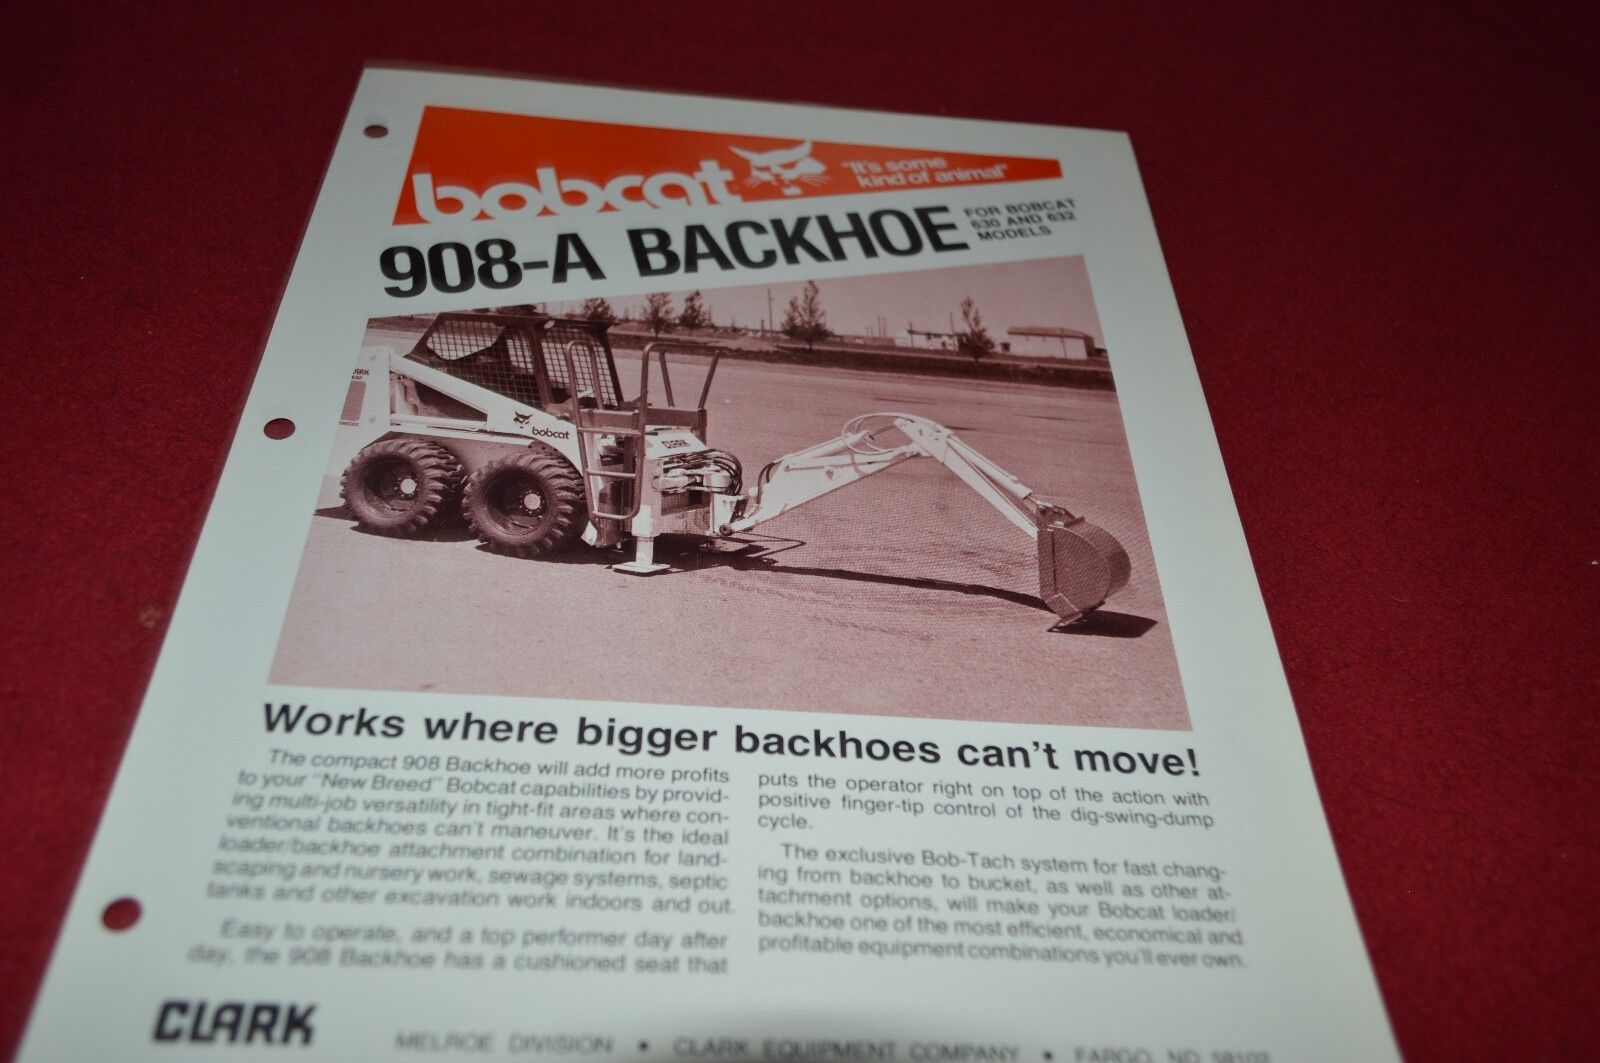 Bobcat Skid Loader 908-A Backhoe Attachment Dealers Brochure DCPA2 